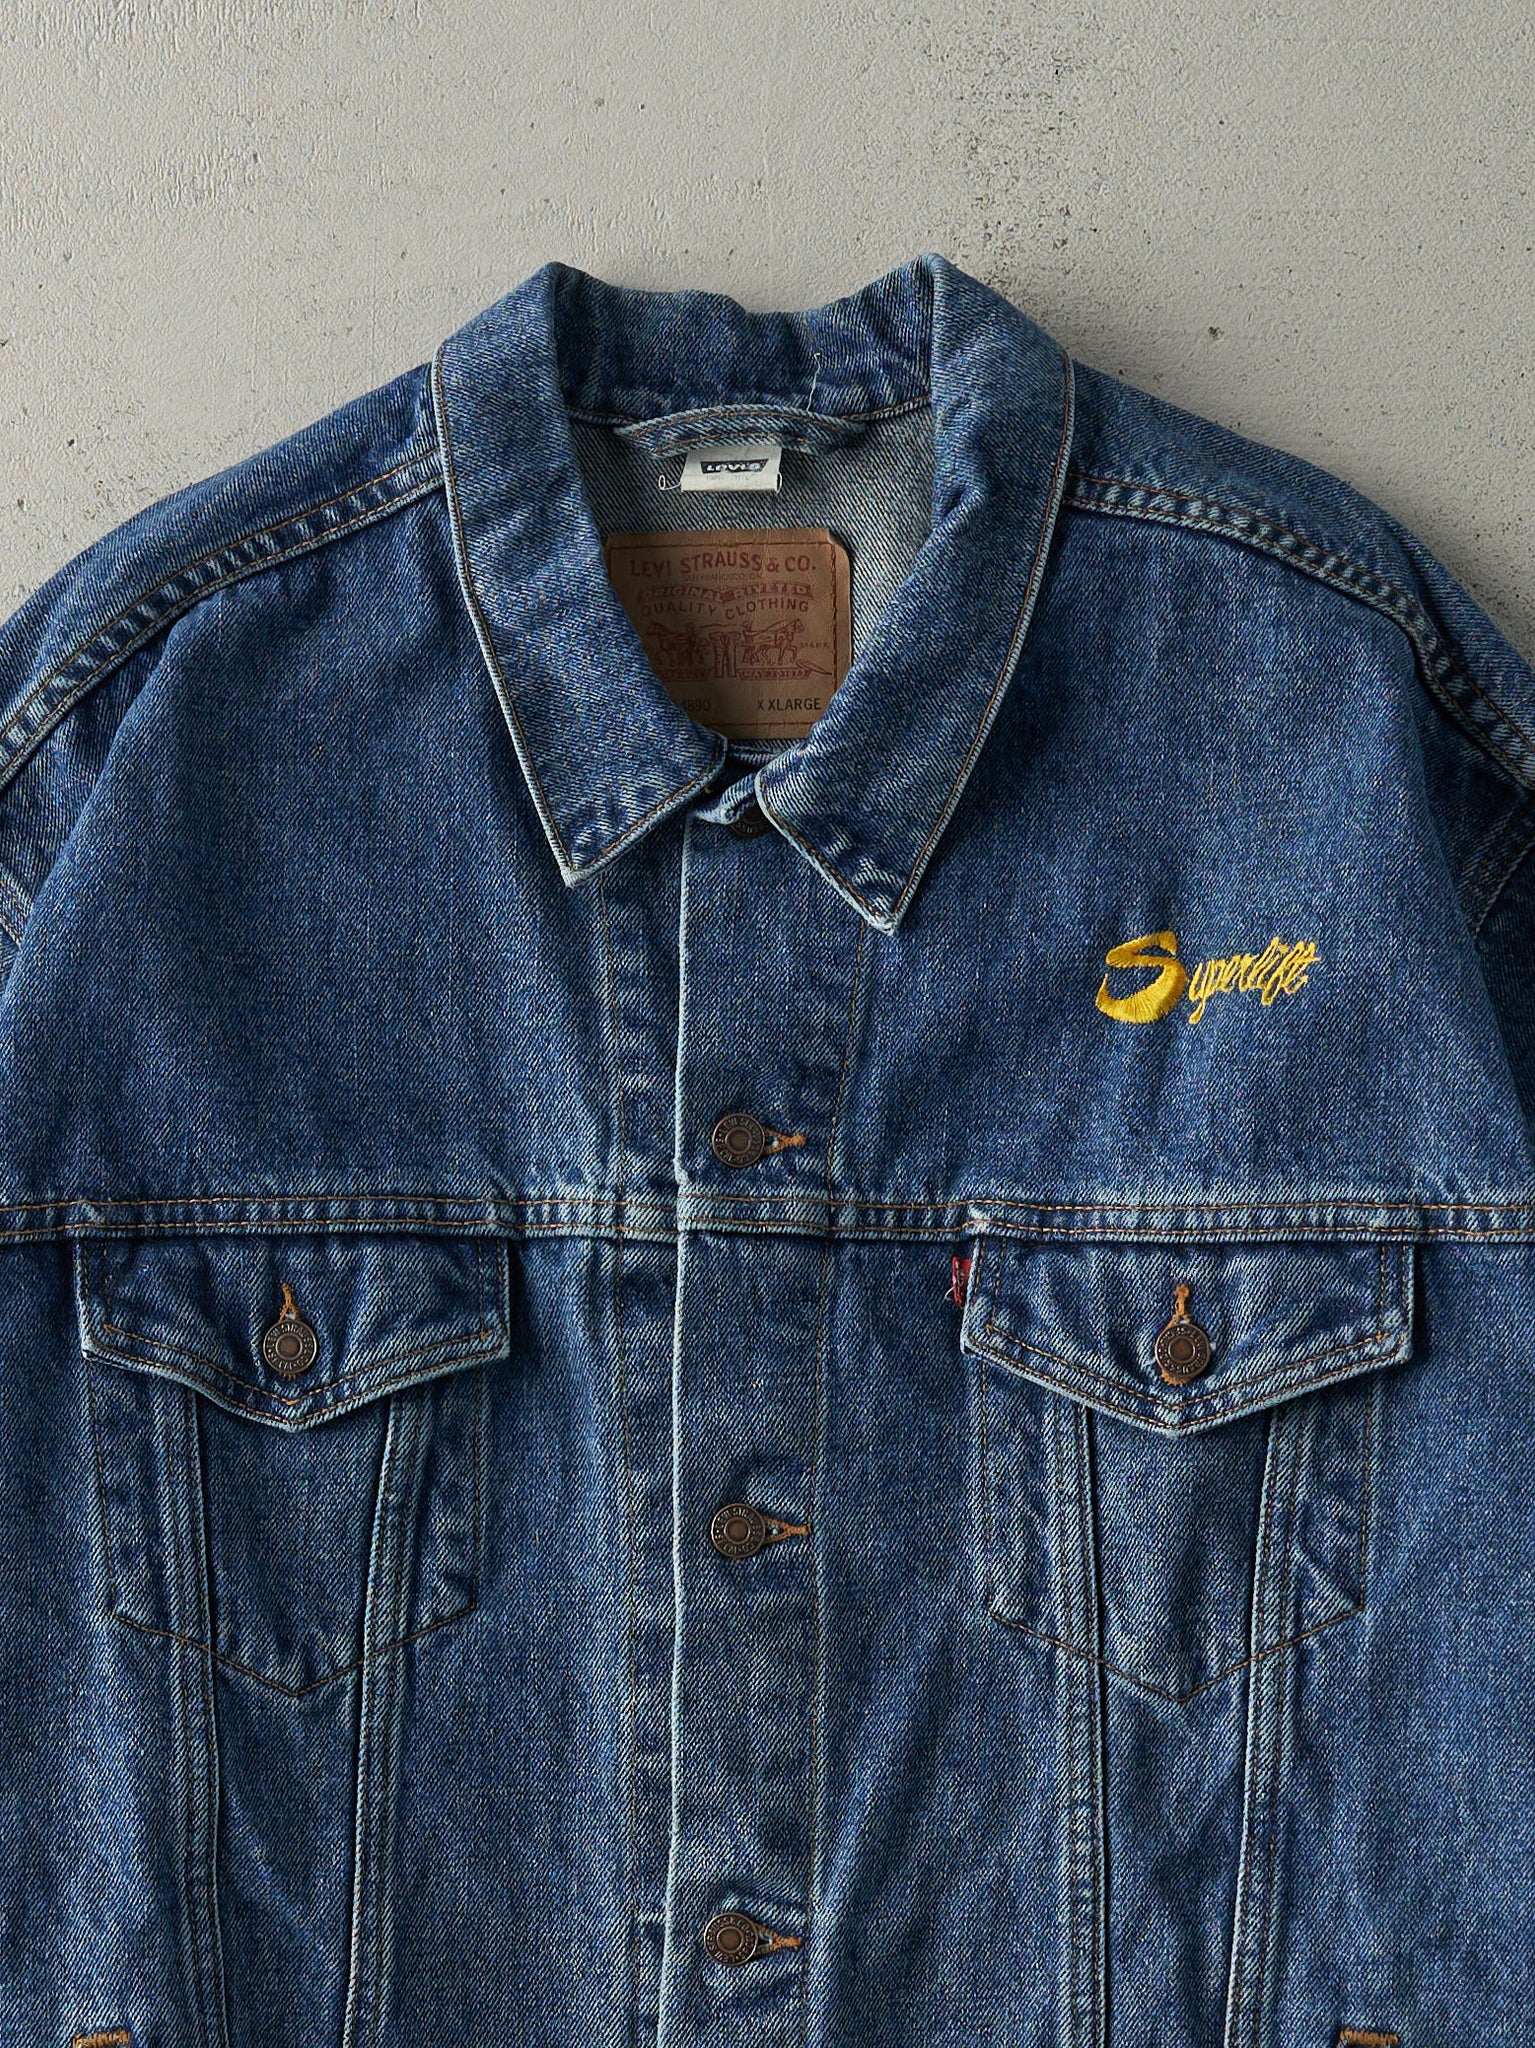 Vintage 90s Mid Wash Embroidered Levi's Type 3 Denim Jacket (XL)